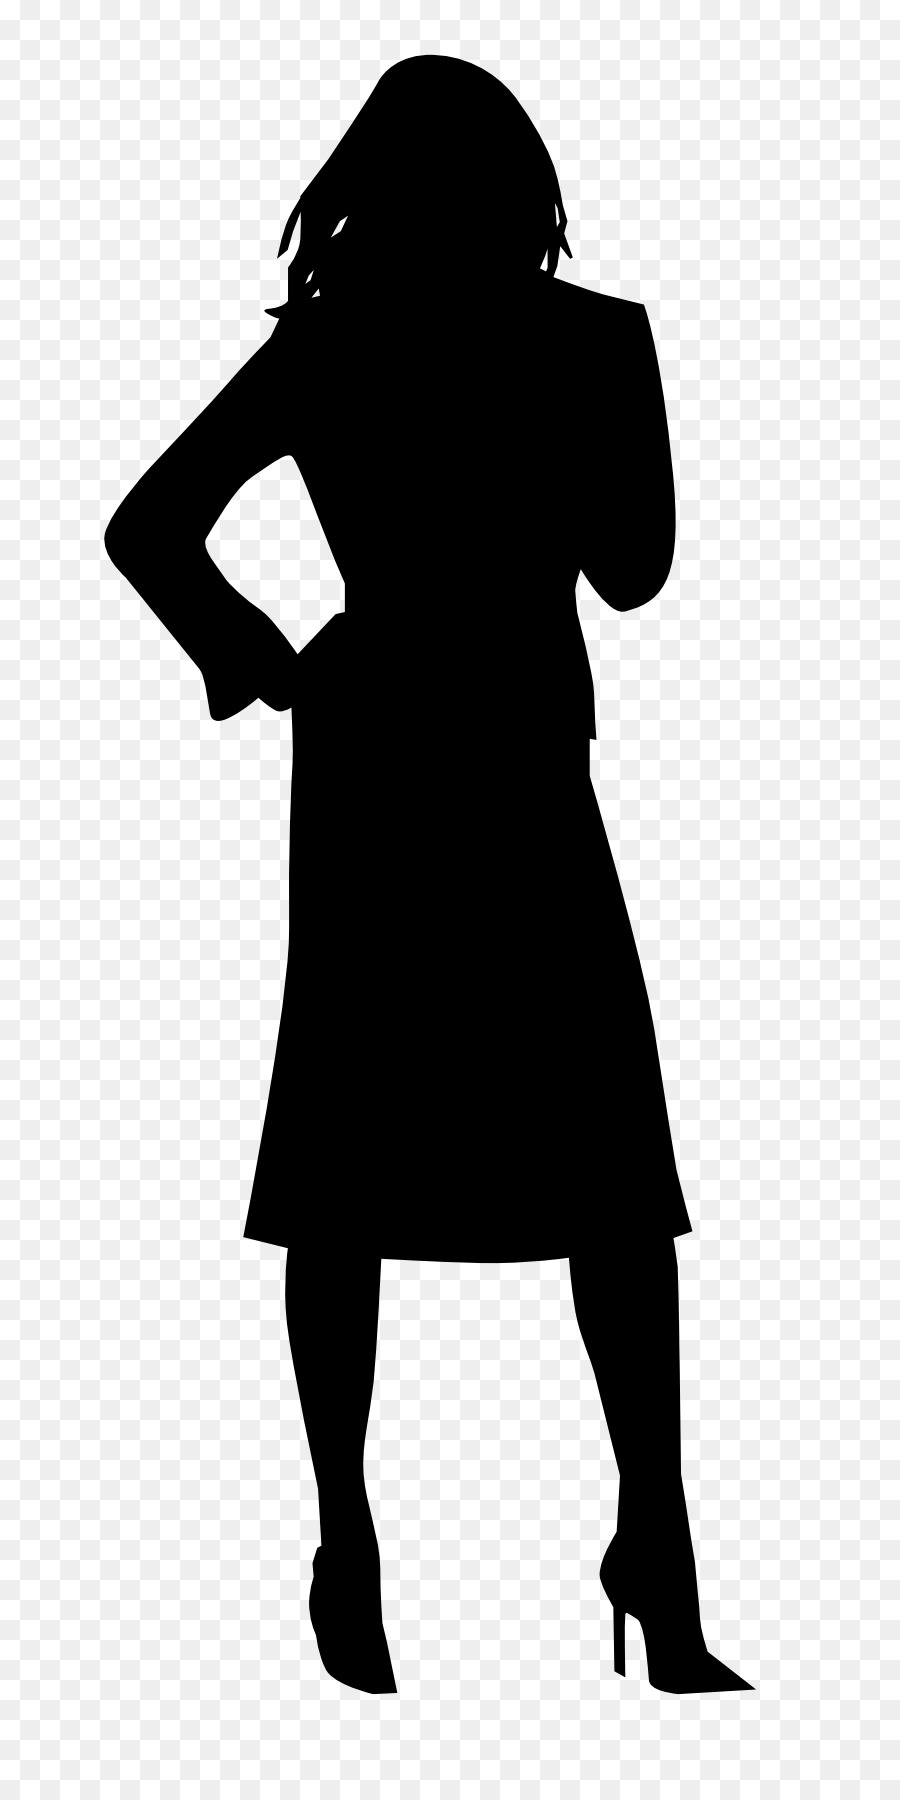 Woman Silhouette Clip art - black woman png download - 800*1789 - Free Transparent Woman png Download.